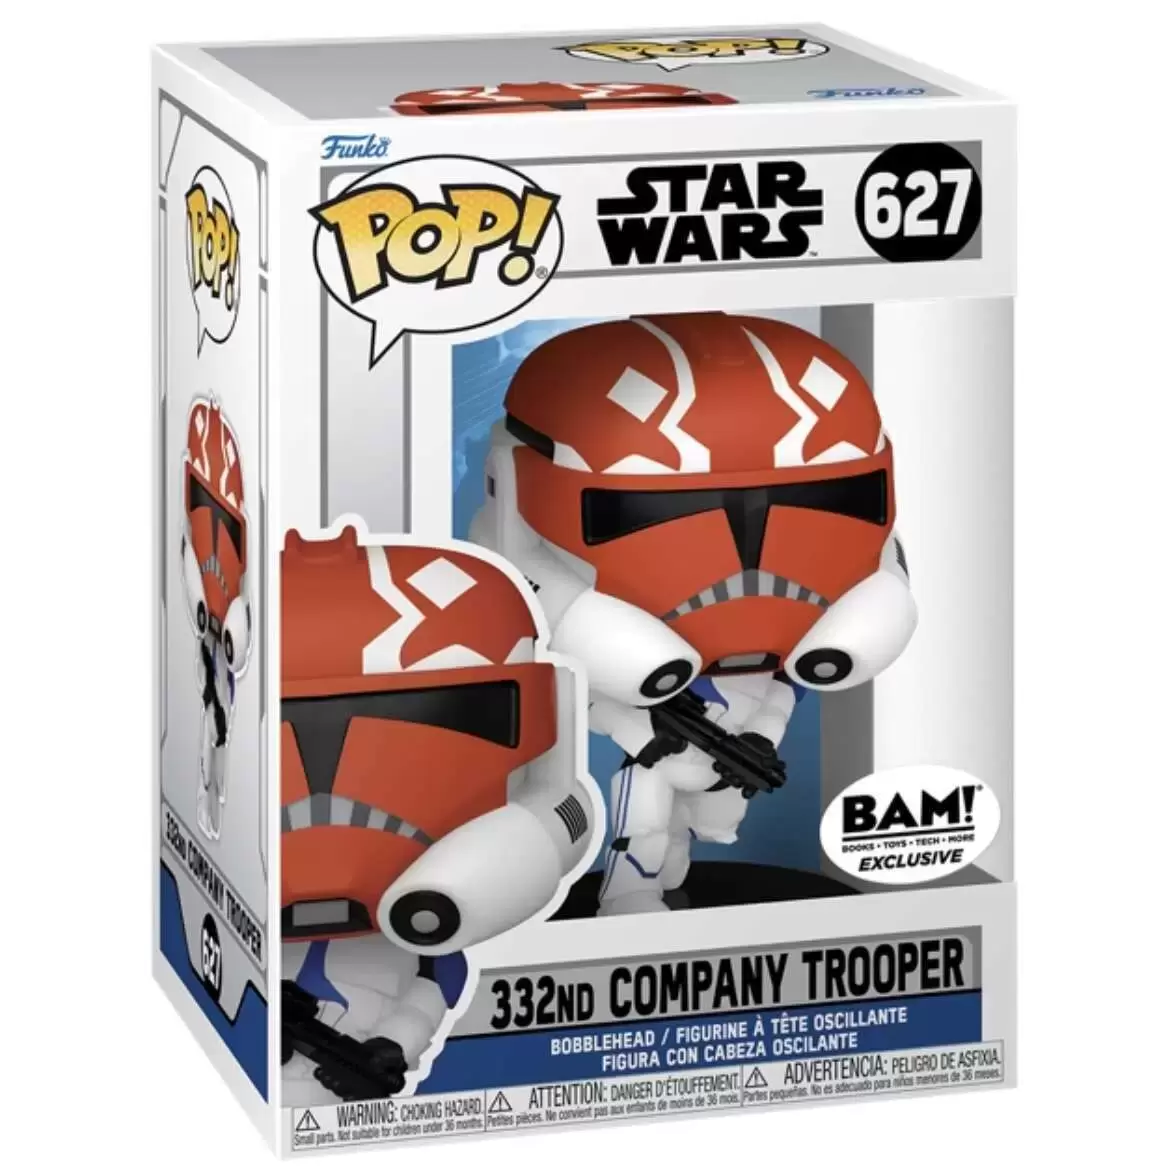 POP! Star Wars - 332nd Company Trooper